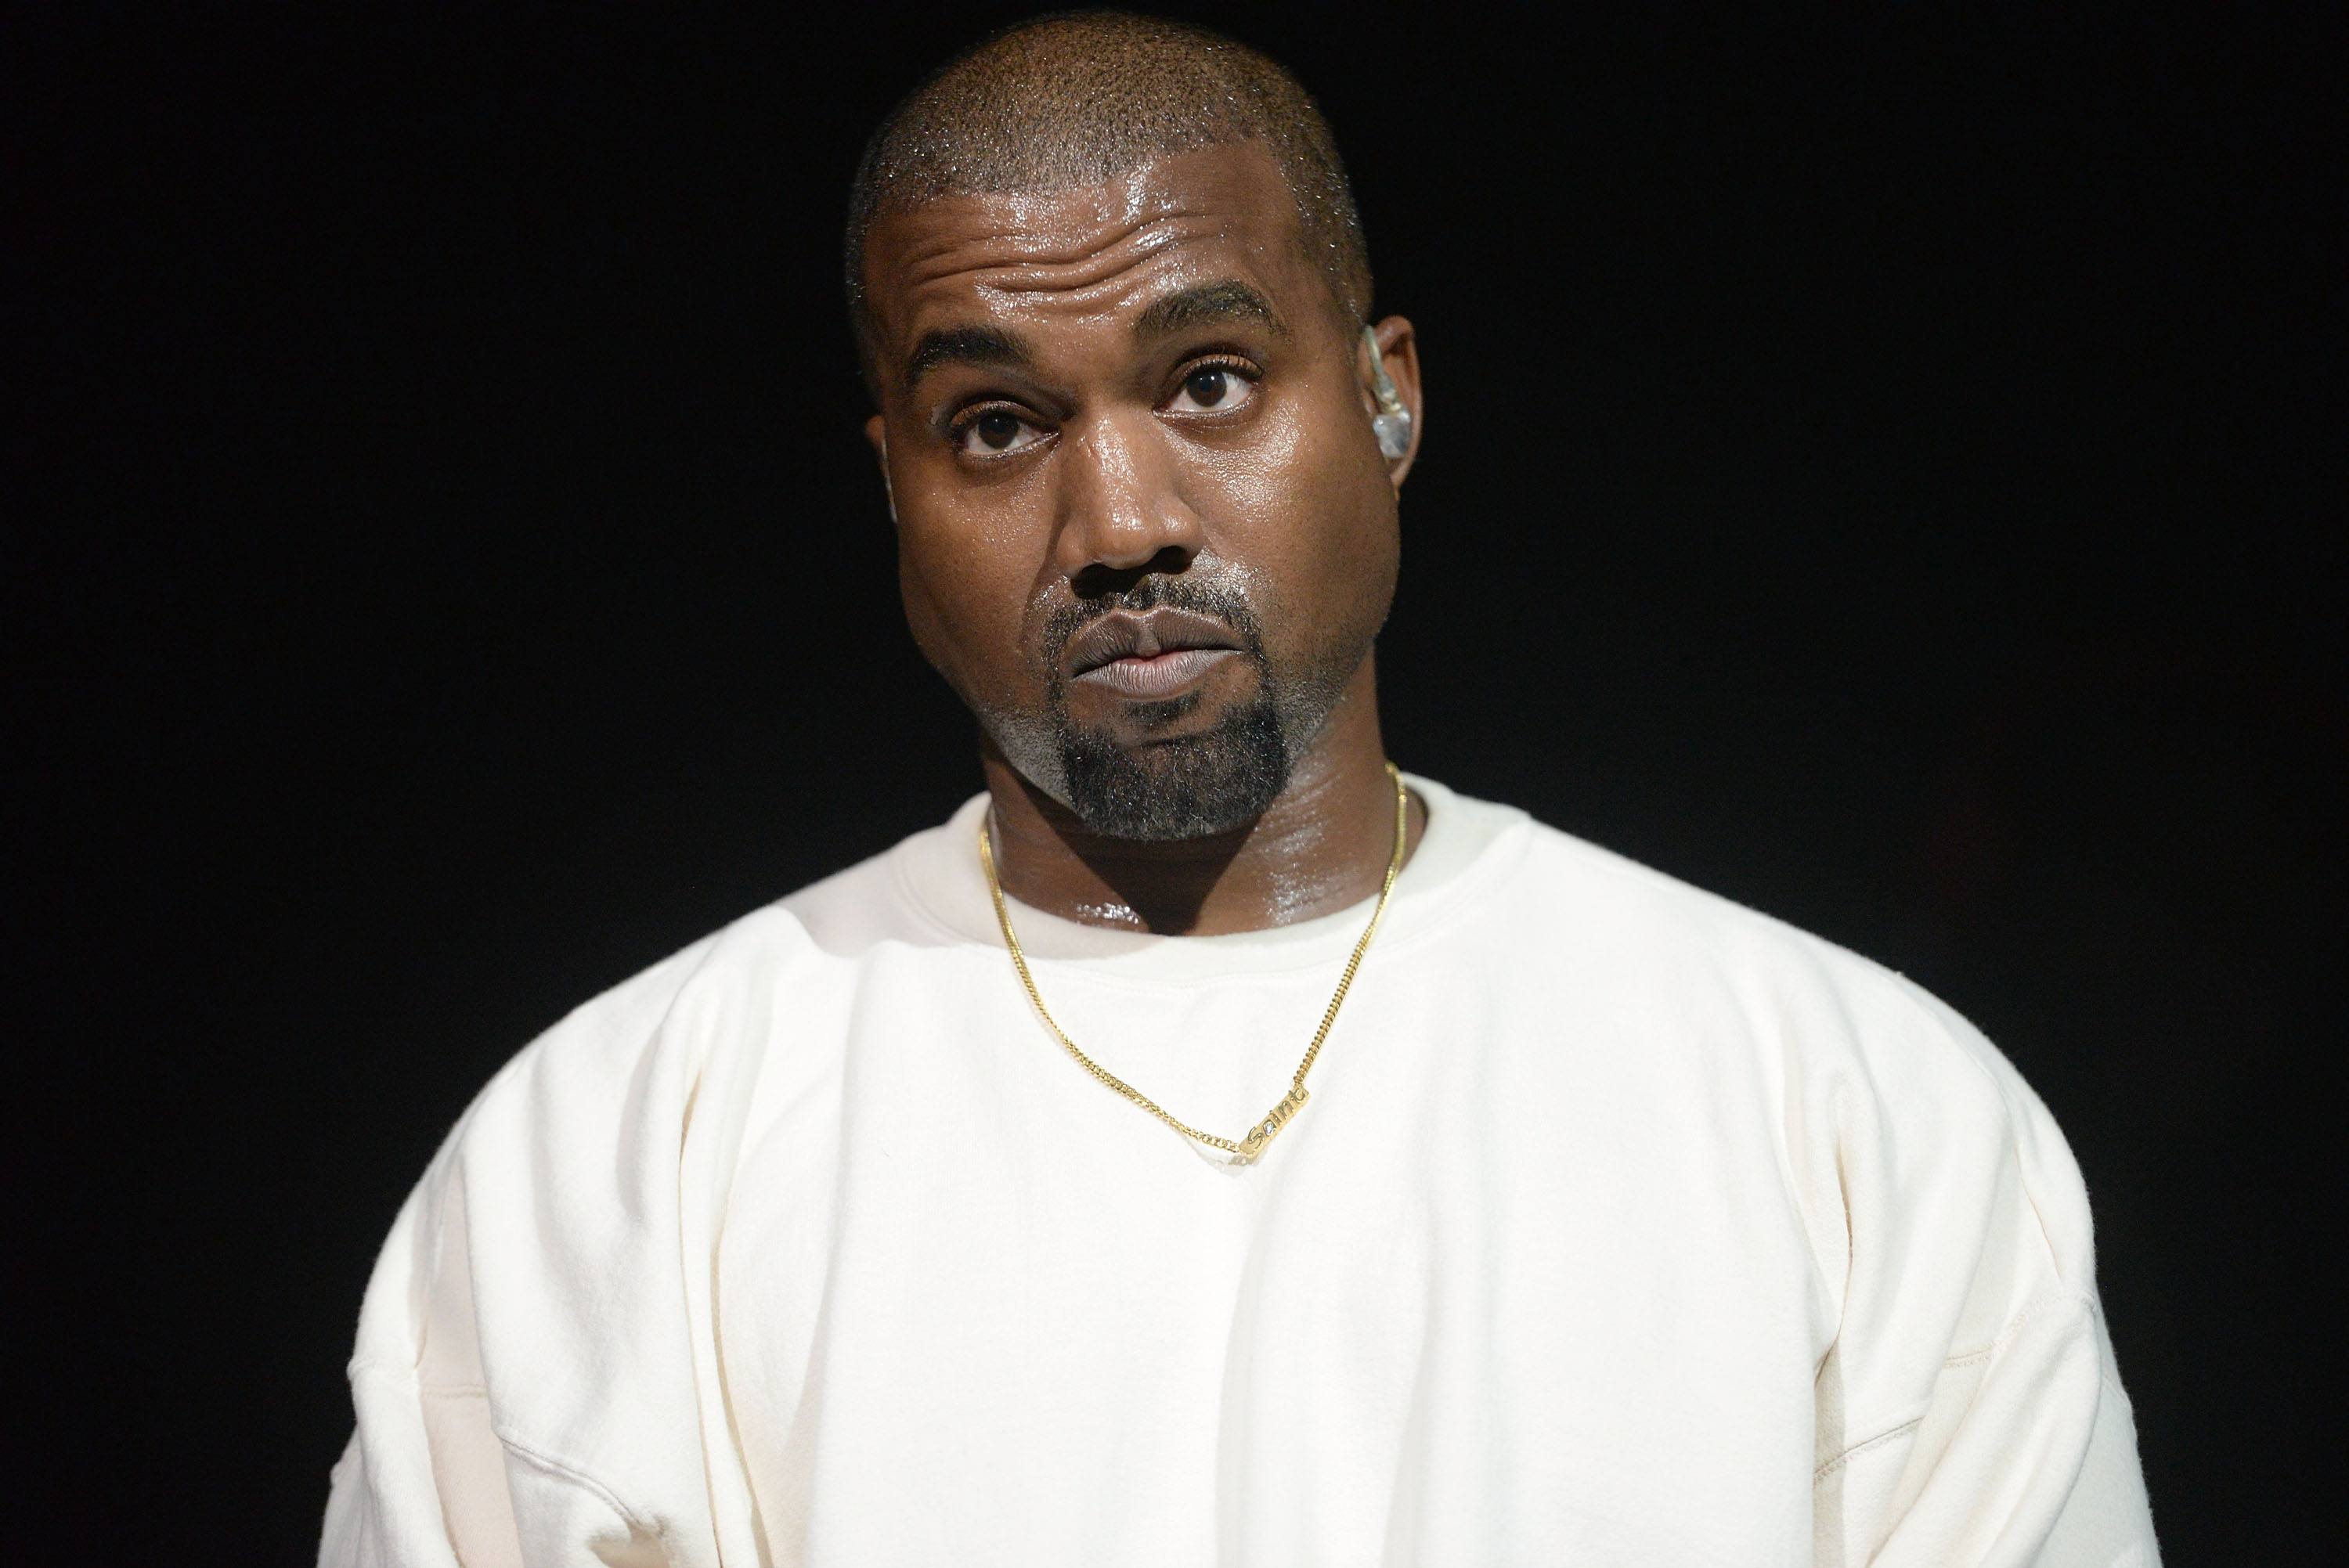 Kim Kardashian Wears Yeezy Shoes After Kanye West's Anti-Semitism